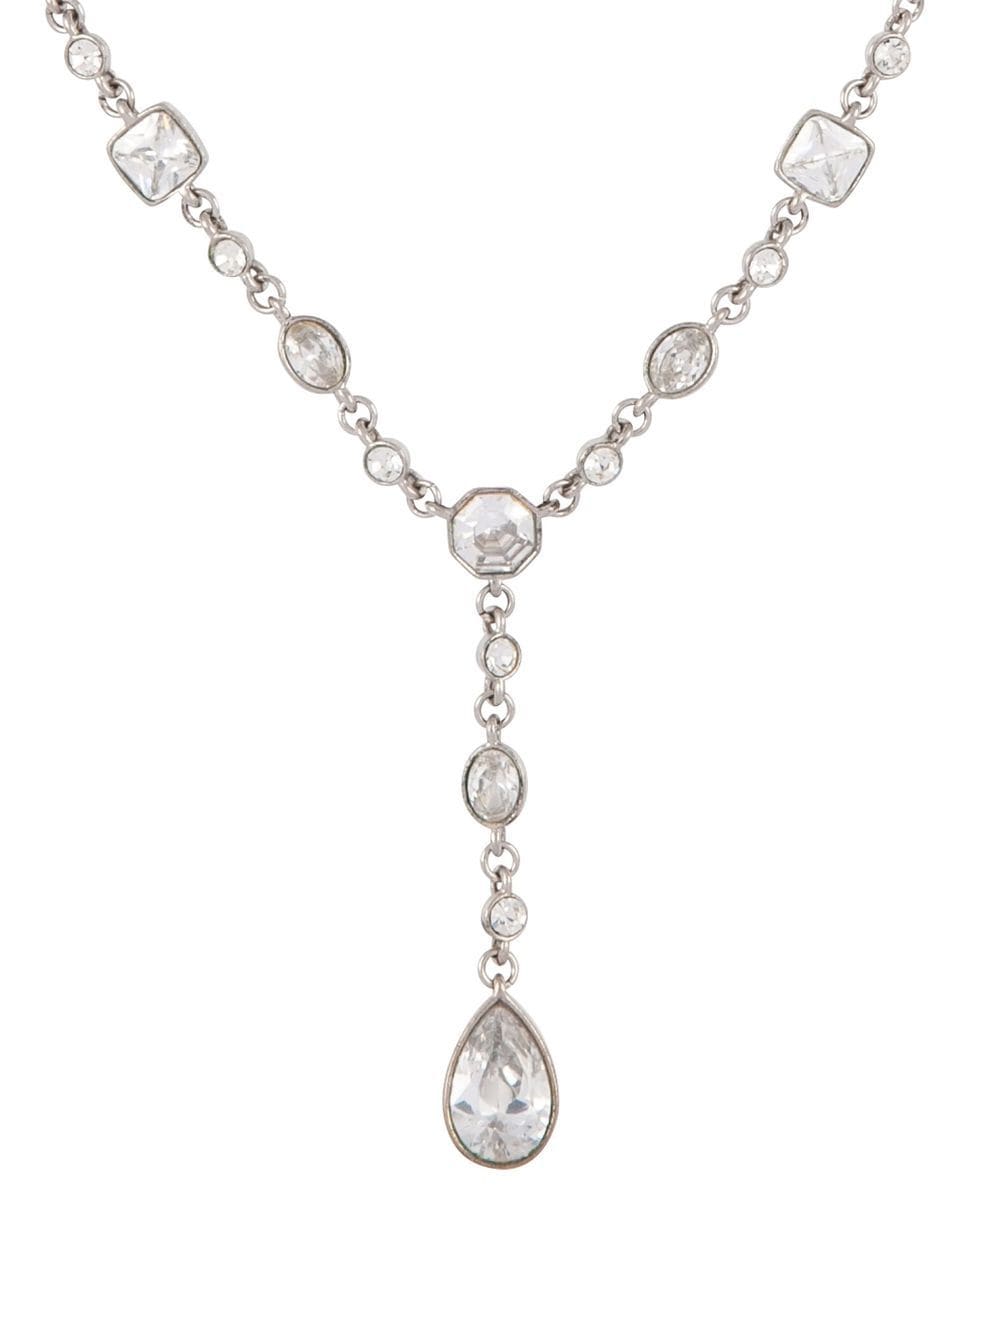 1990s Edwardian Revival crystal necklace